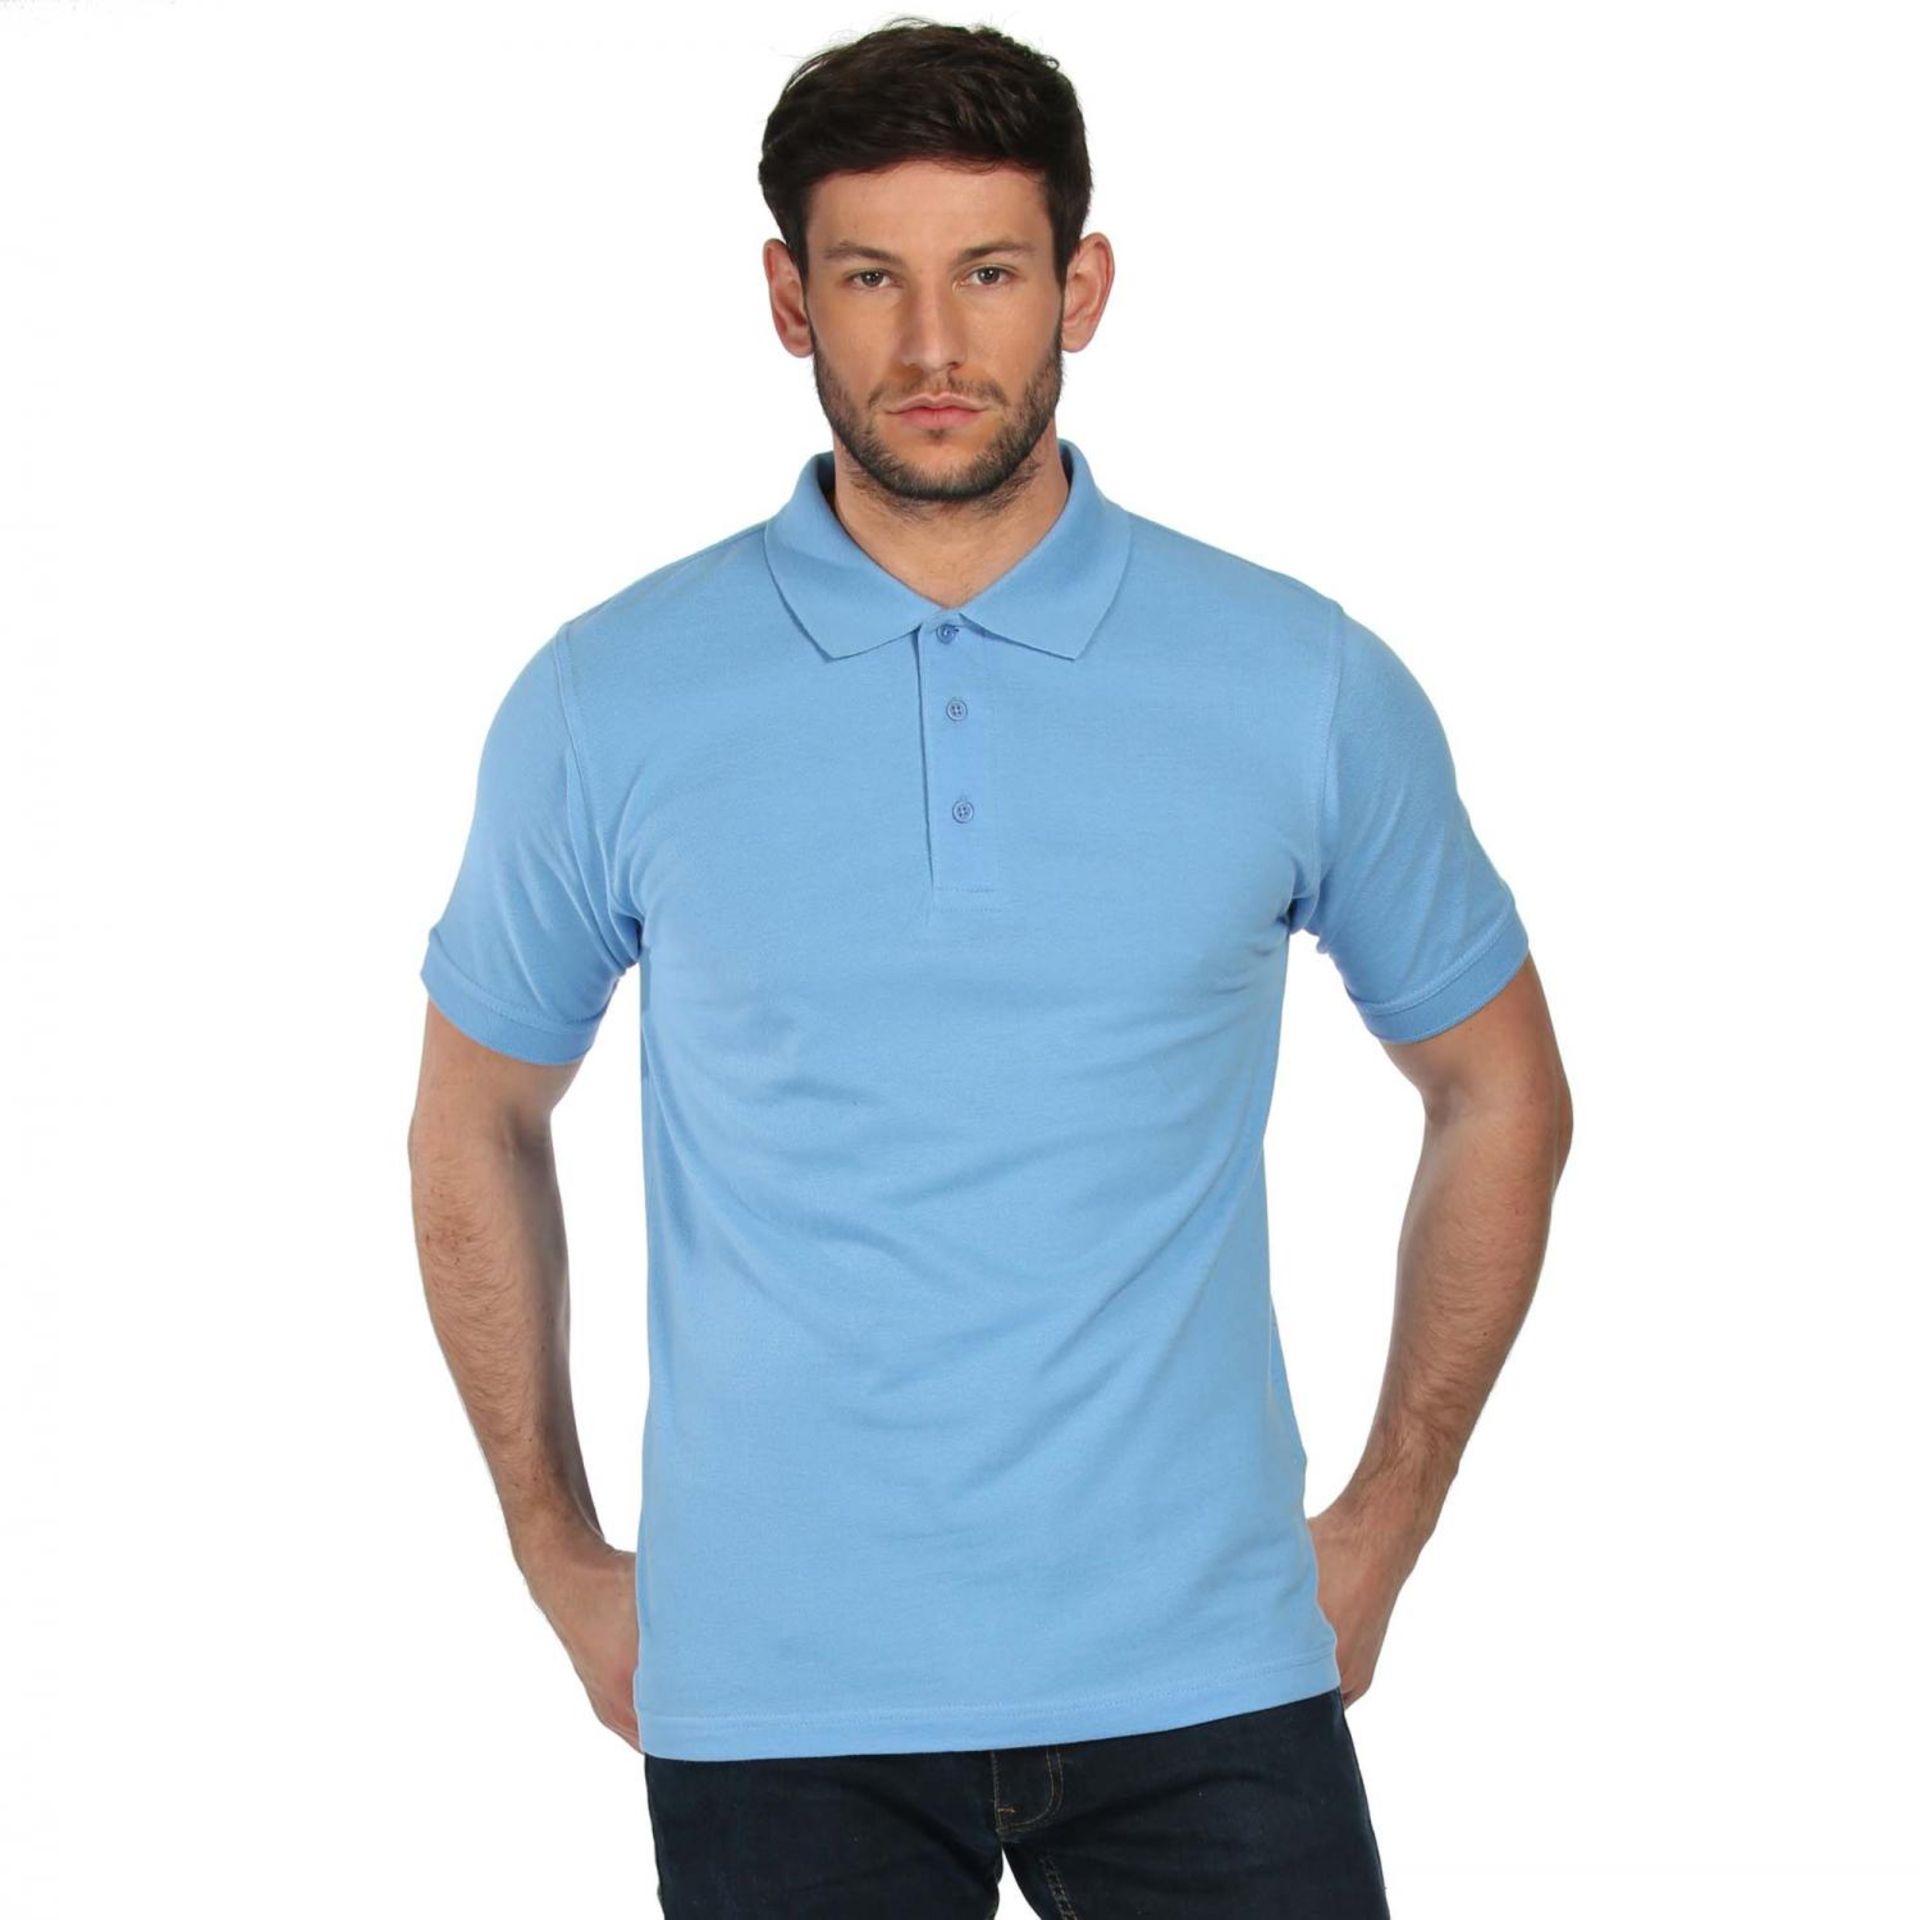 Regatta Professional Mens Cotton Polo shirt, SIZE-XL COLOUR-BLUE SKIES (BOX 1)RRP £18 This Classic